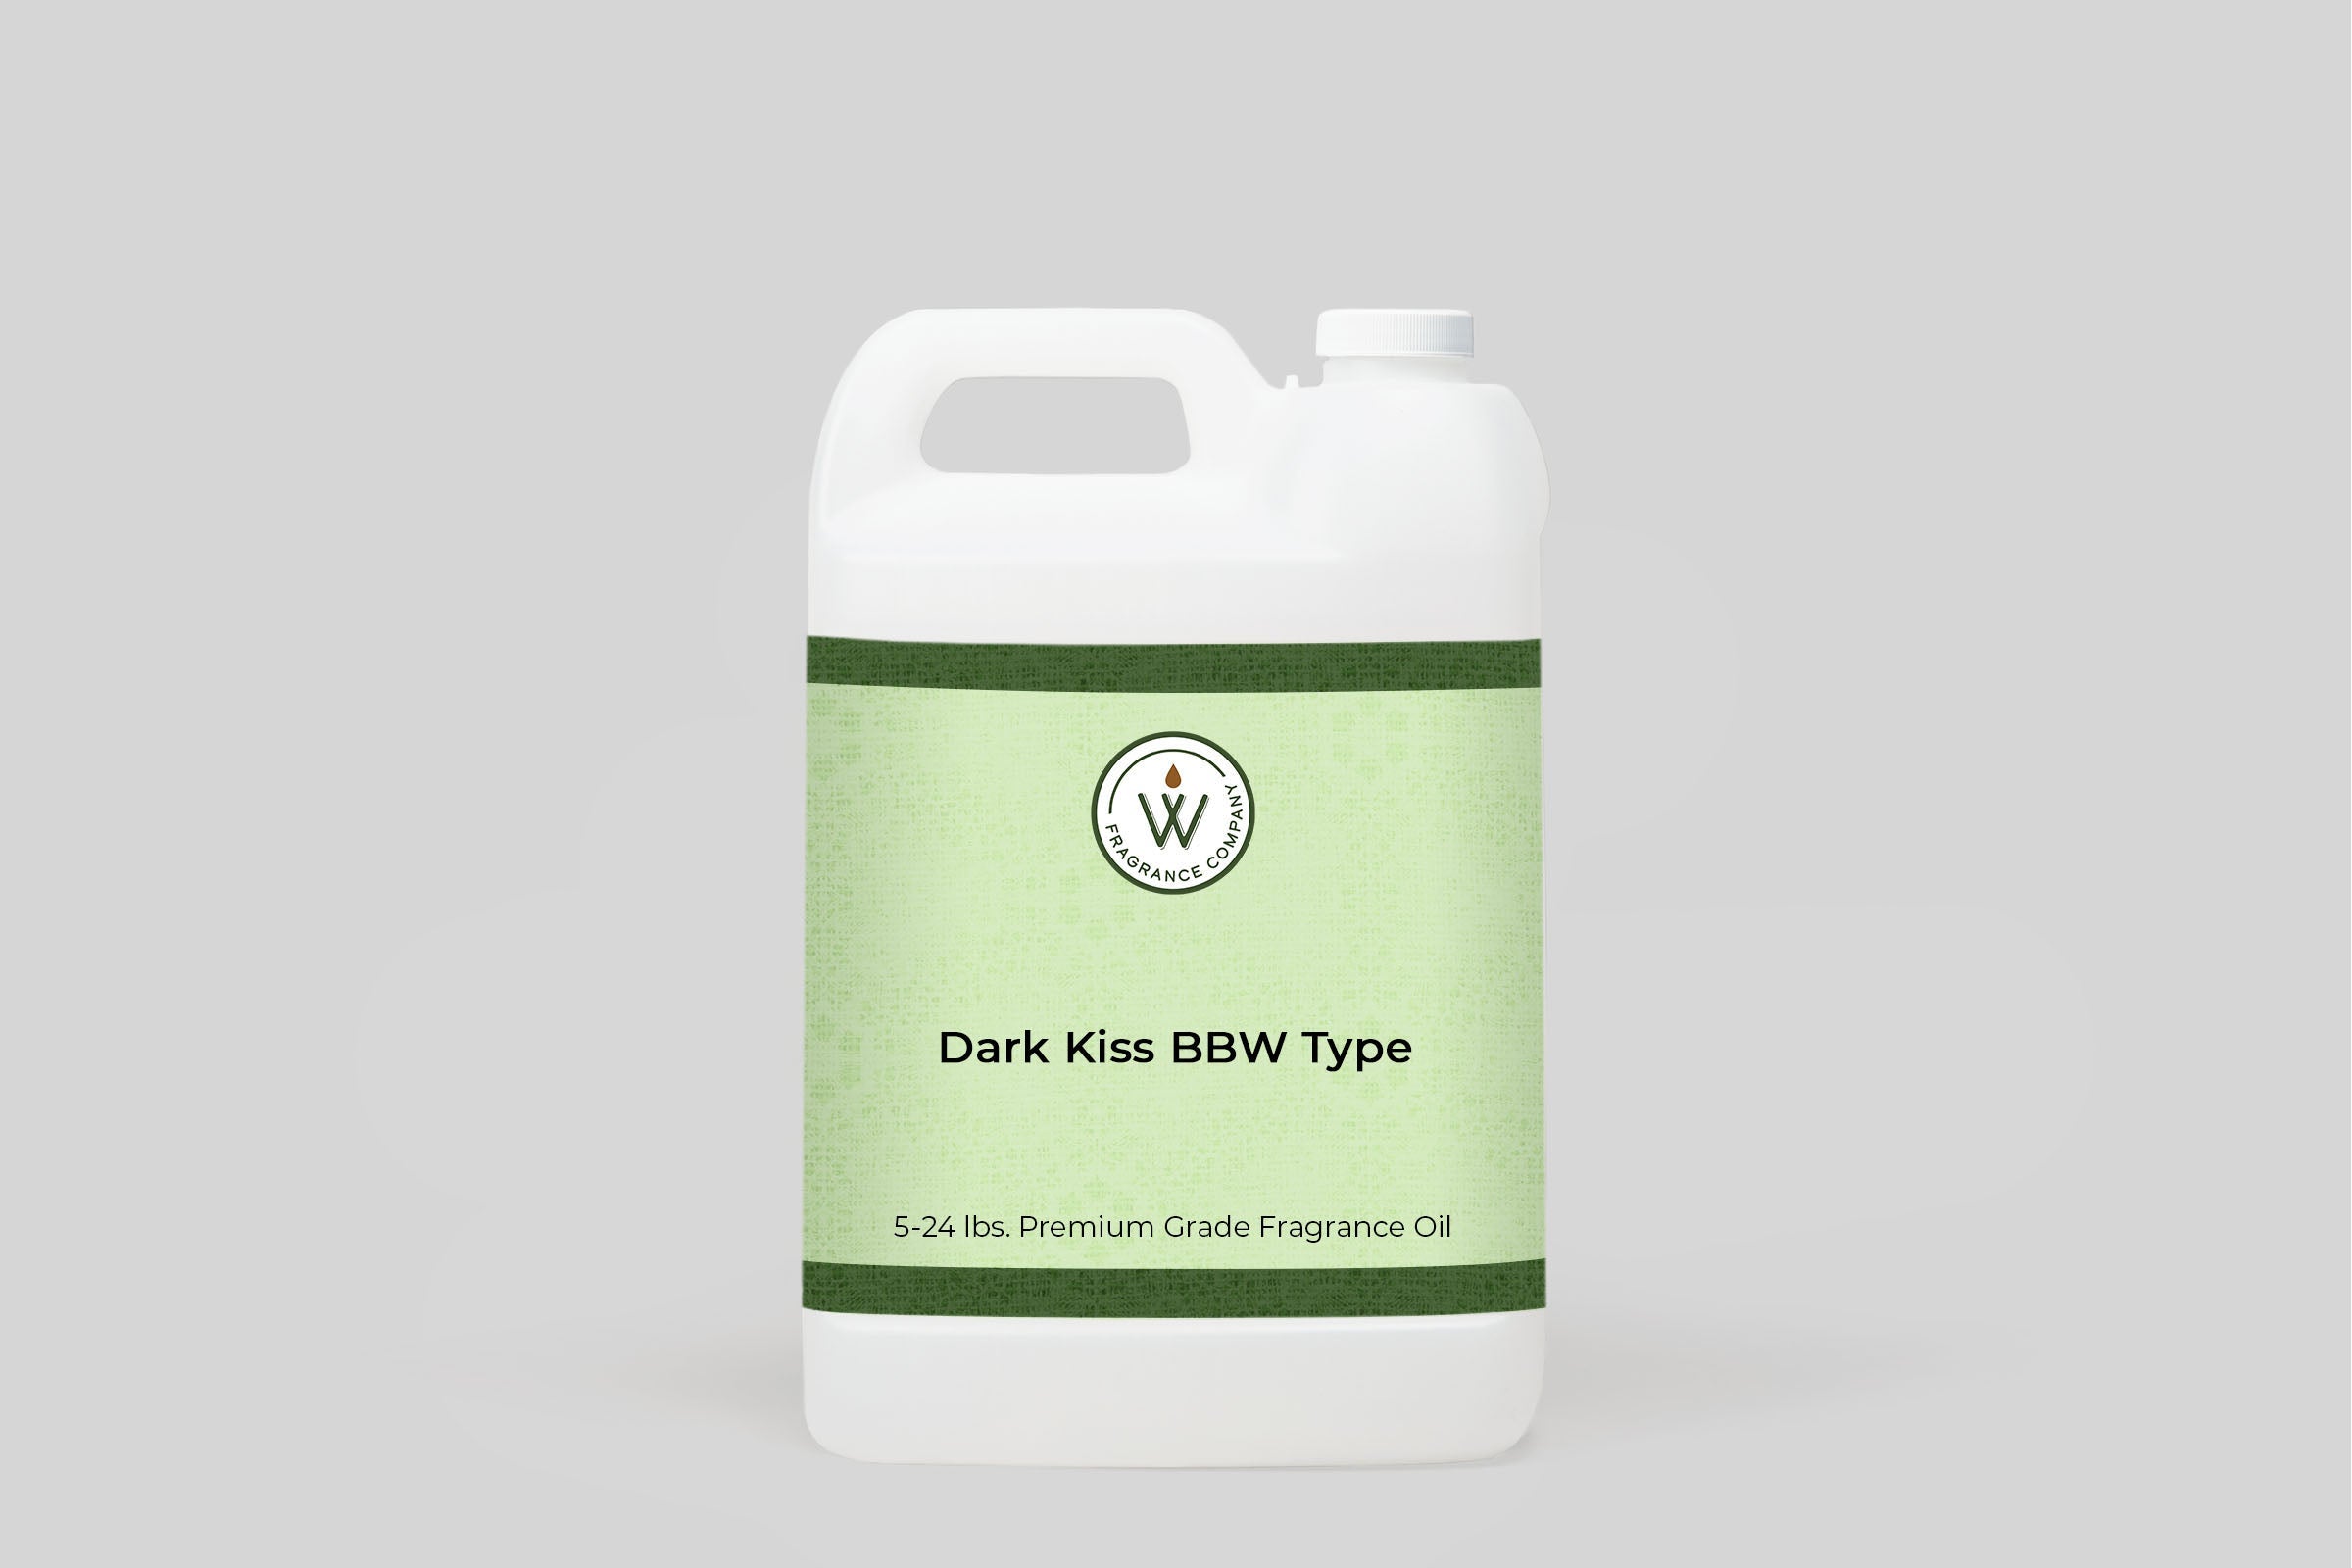 Dark Kiss BBW Type Fragrance Oil